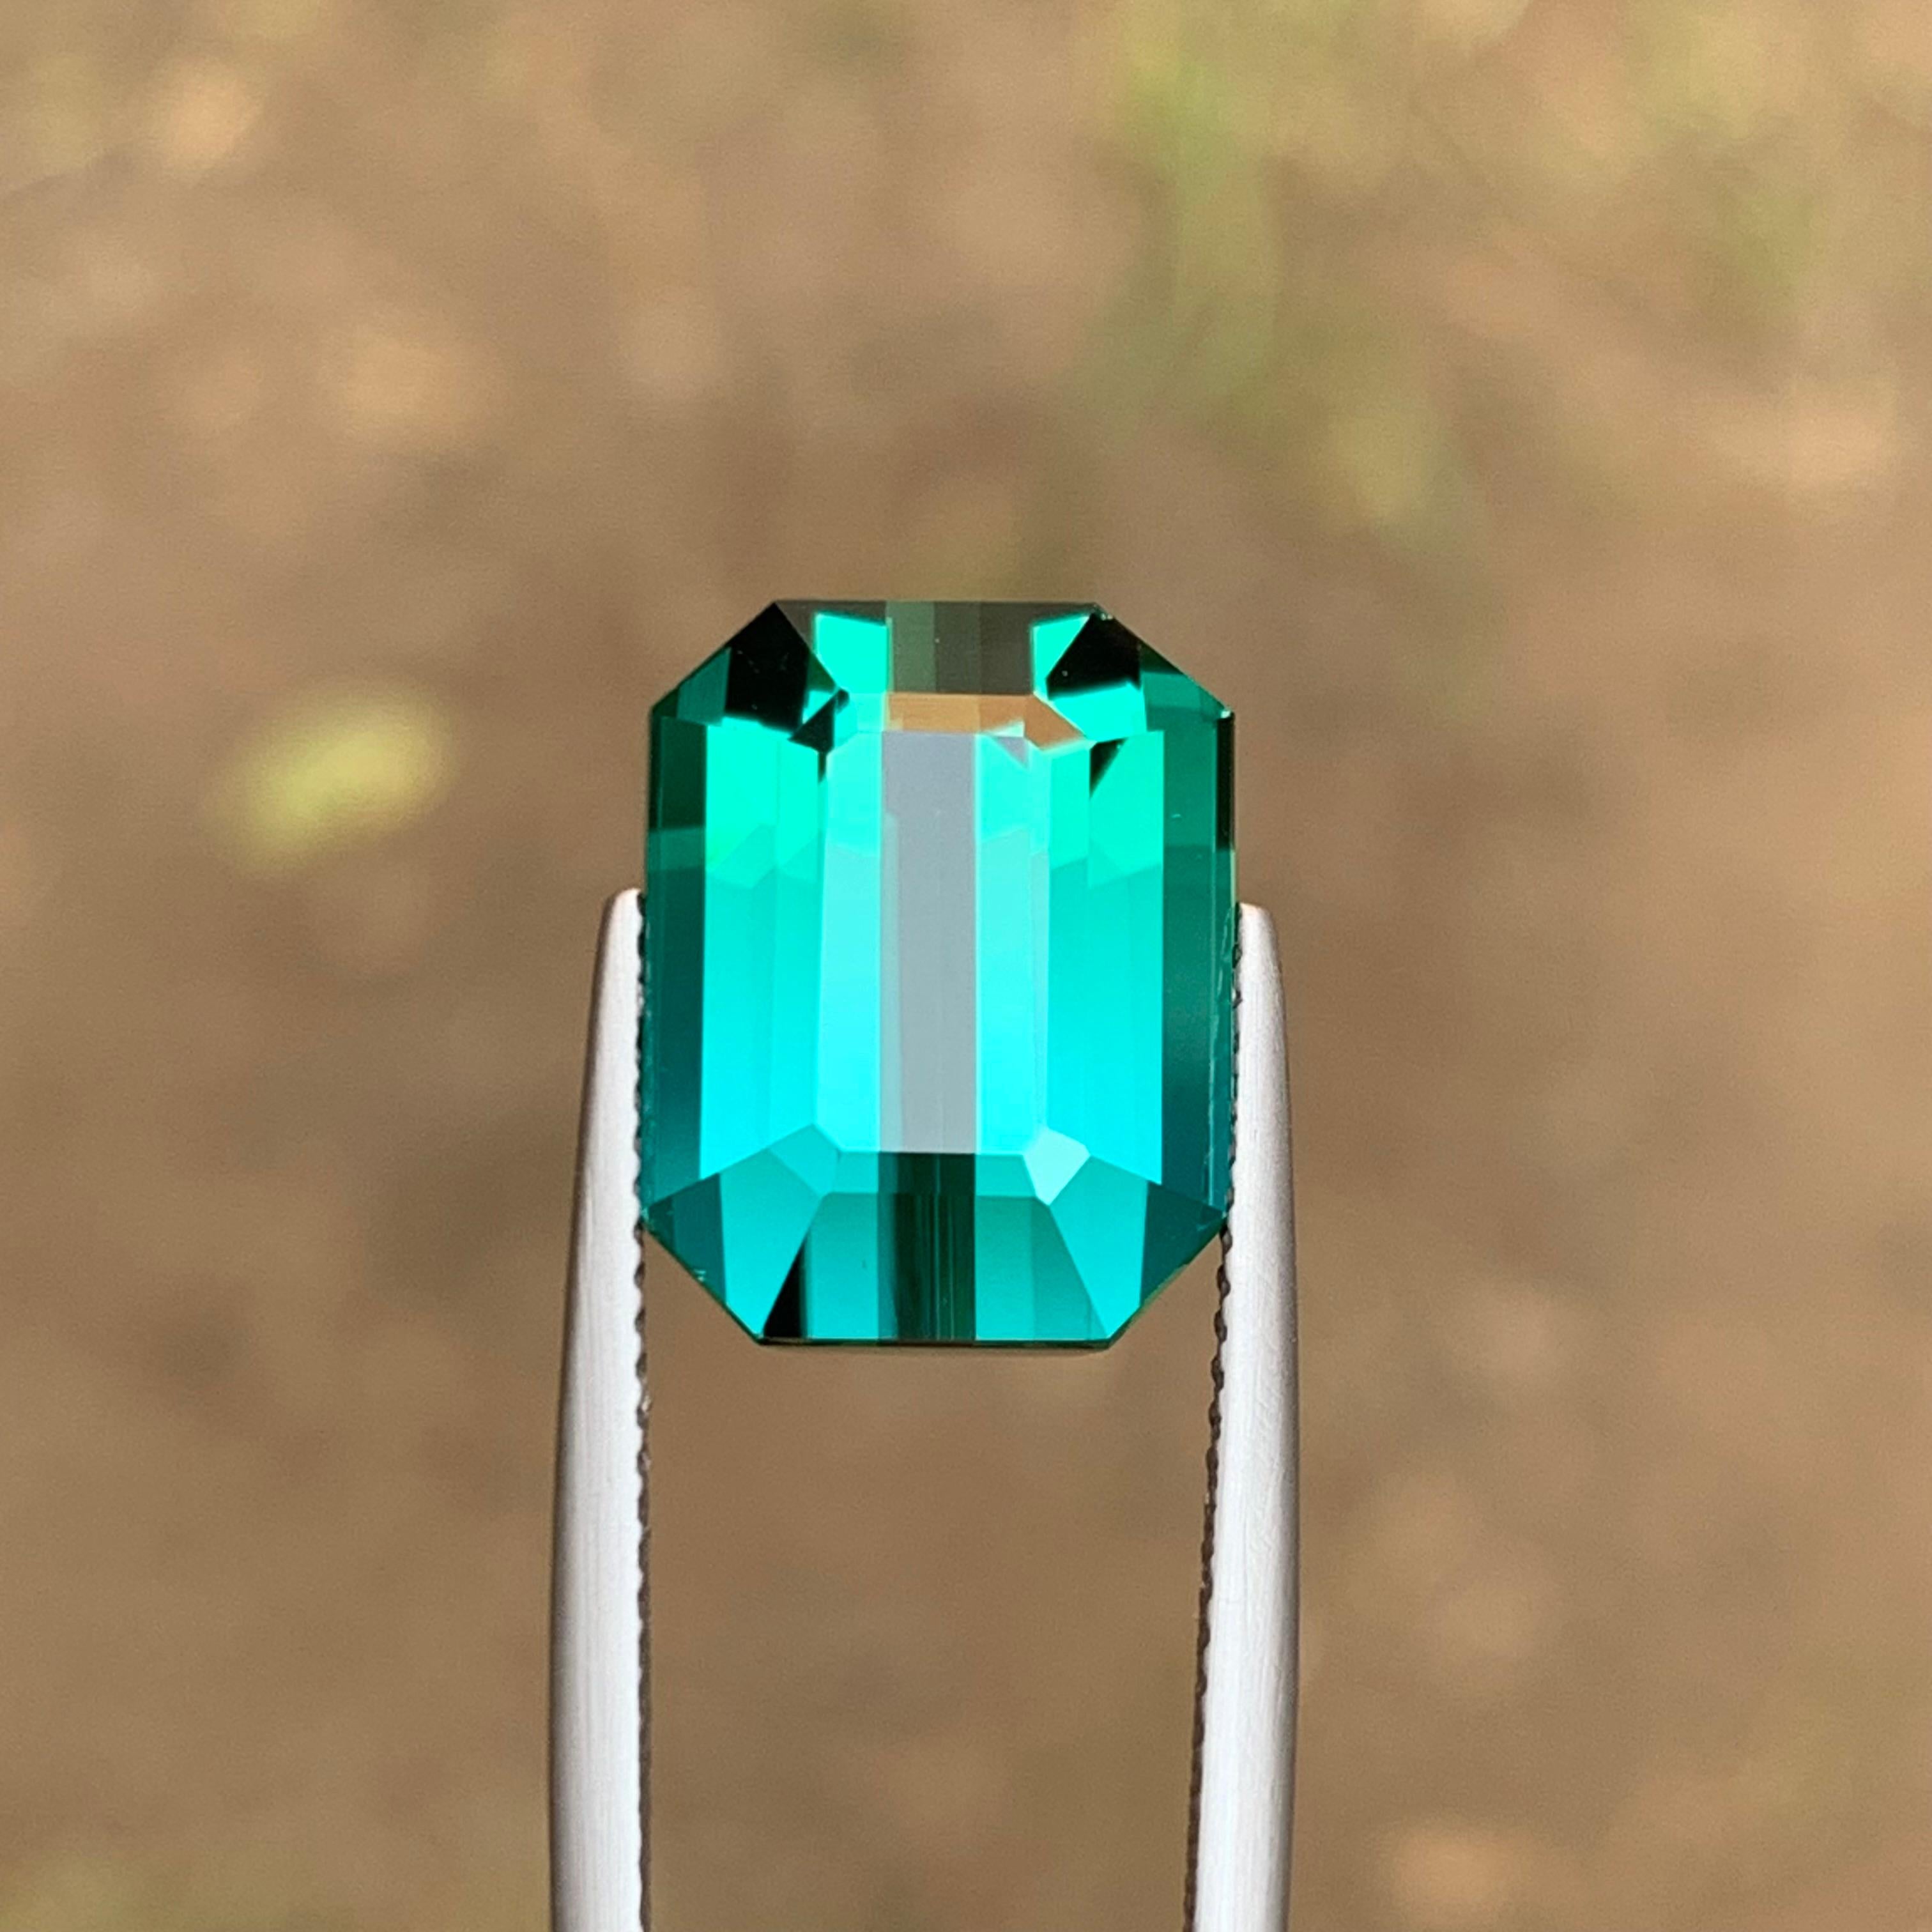 Rare Greenish Blue Flawless Natural Tourmaline Gemstone, 13.05 Ct Emerald Cut Af For Sale 6